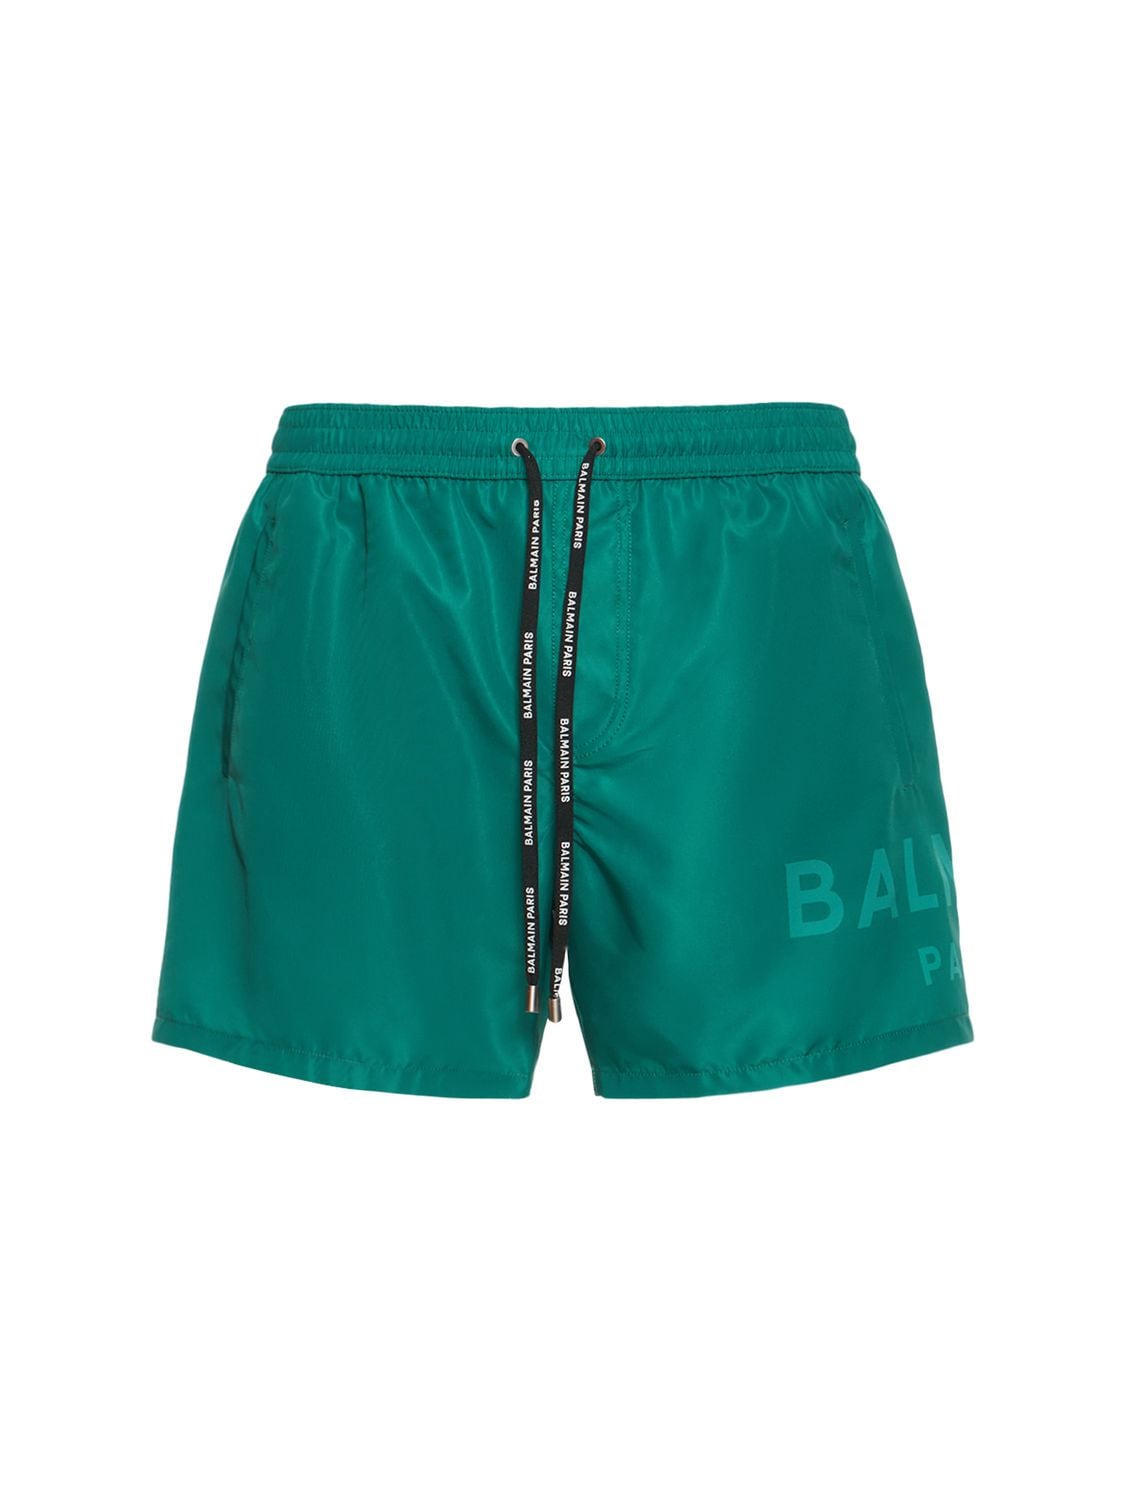 Balmain Underwear Logo Printed Stretch Nylon Swim Shorts In Green